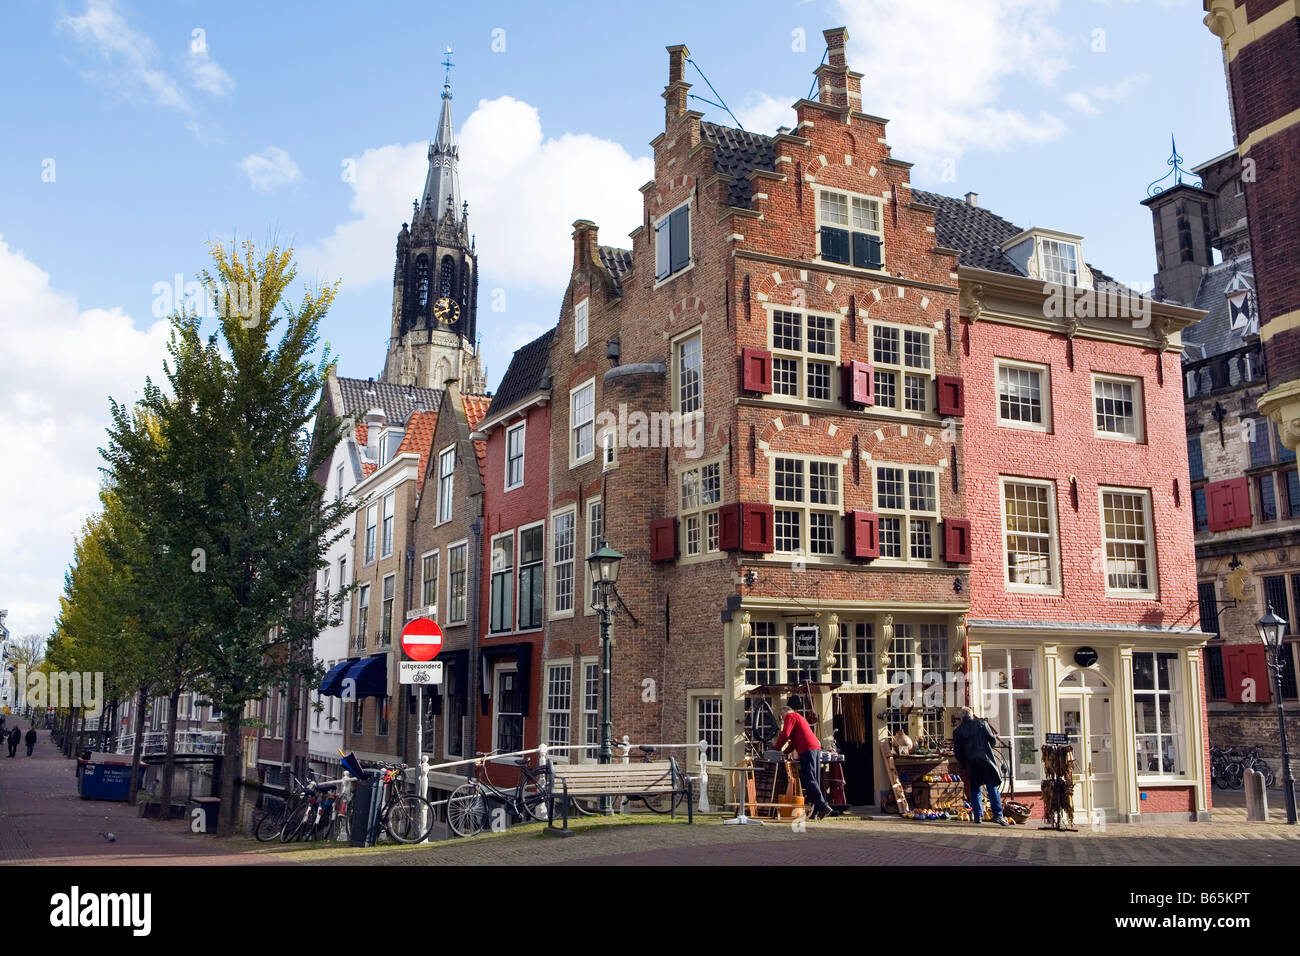 Street scene in Delft The Netherlands Stock Photo